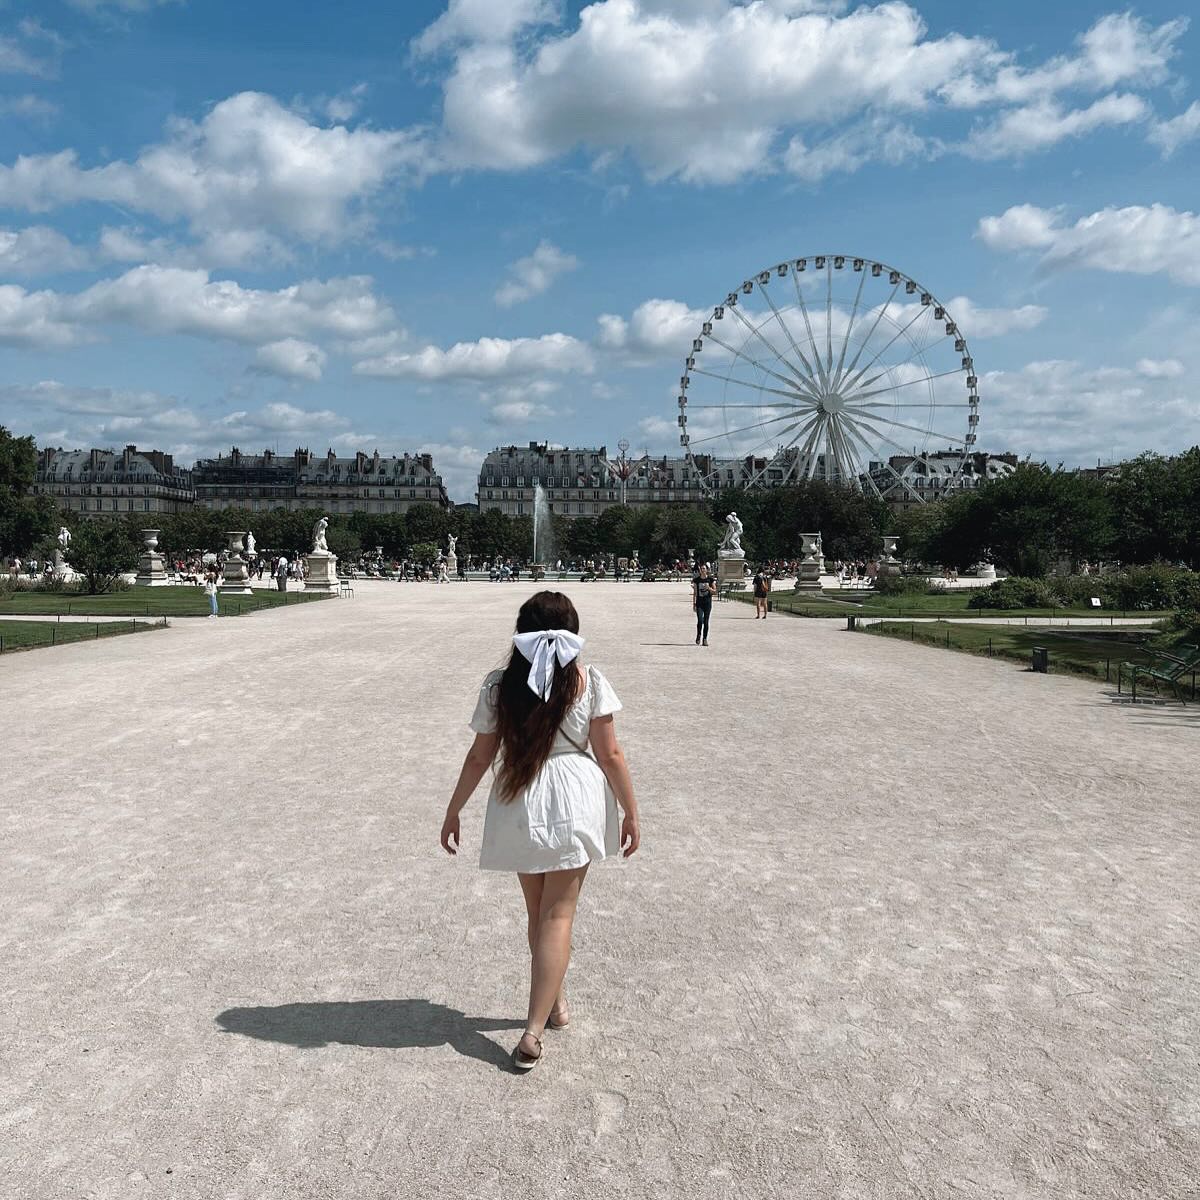 She’s got her head In the clouds ☁️ 

-
-
-
-
-

#paris #parisfrance #france #eiffeltower #ootd #motd #pltstyle #travel